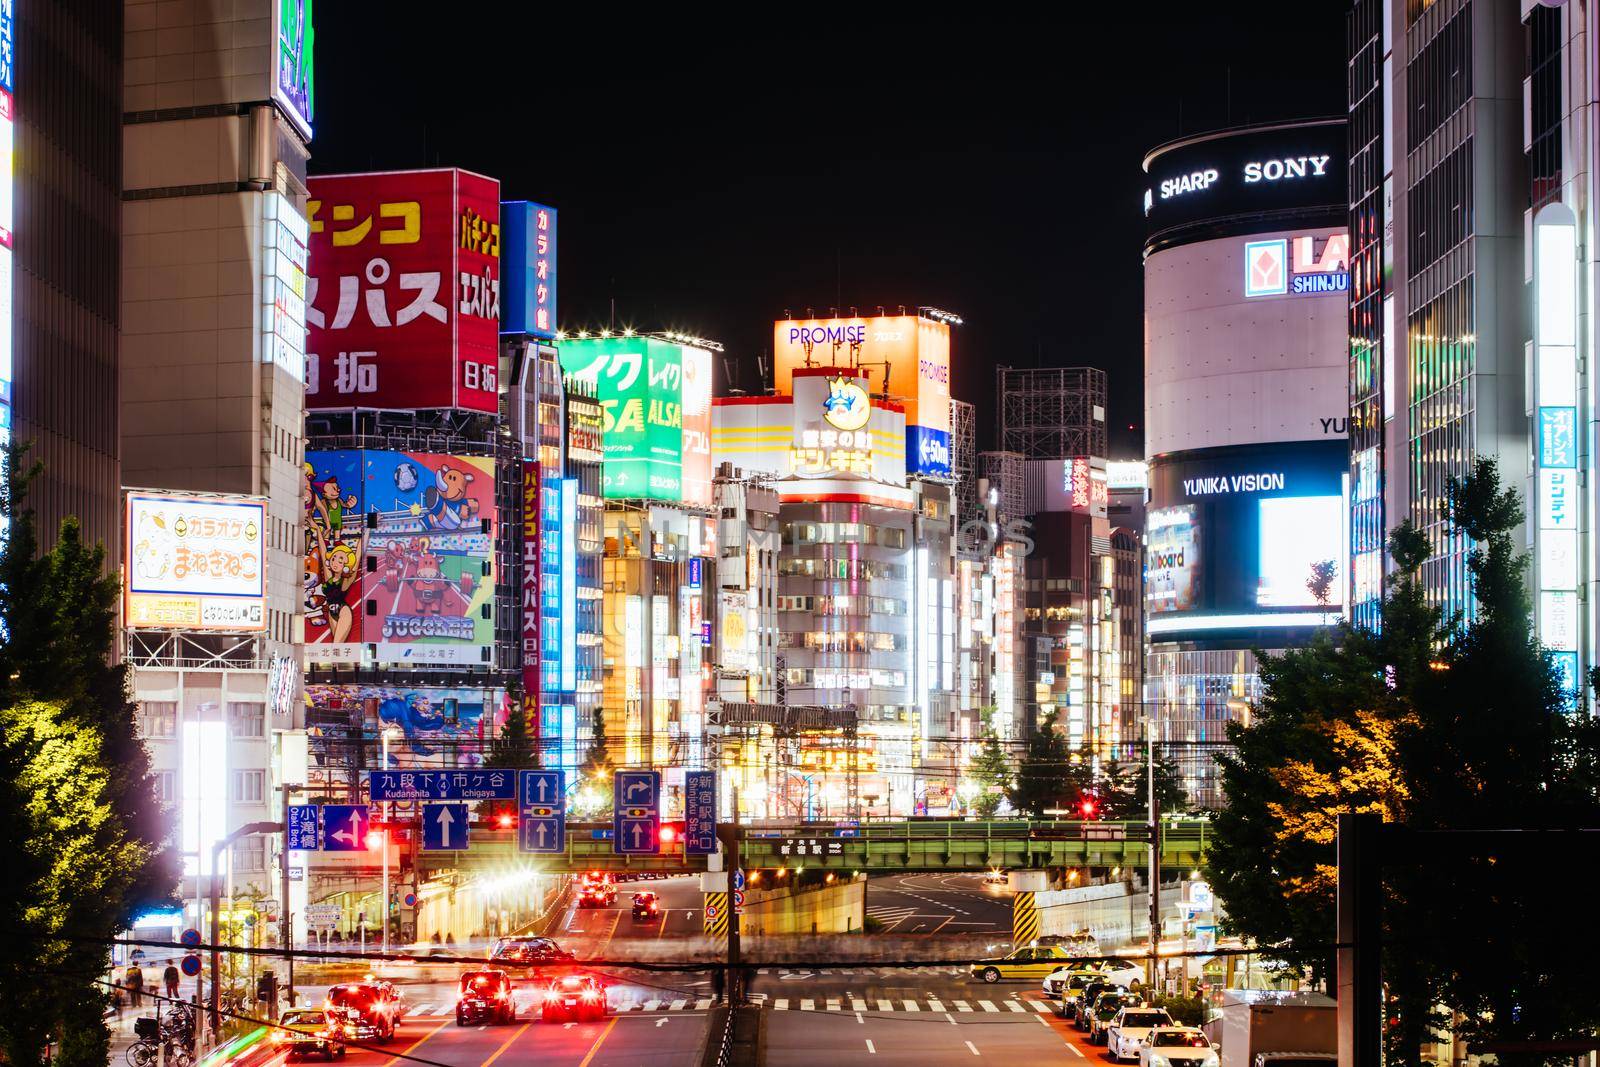 Shinjuku, Japan, May 18 2019: Neon signs illuminate Tokyo s busy Shinjuku neighborhood at night along Yasukuni Dori Ave